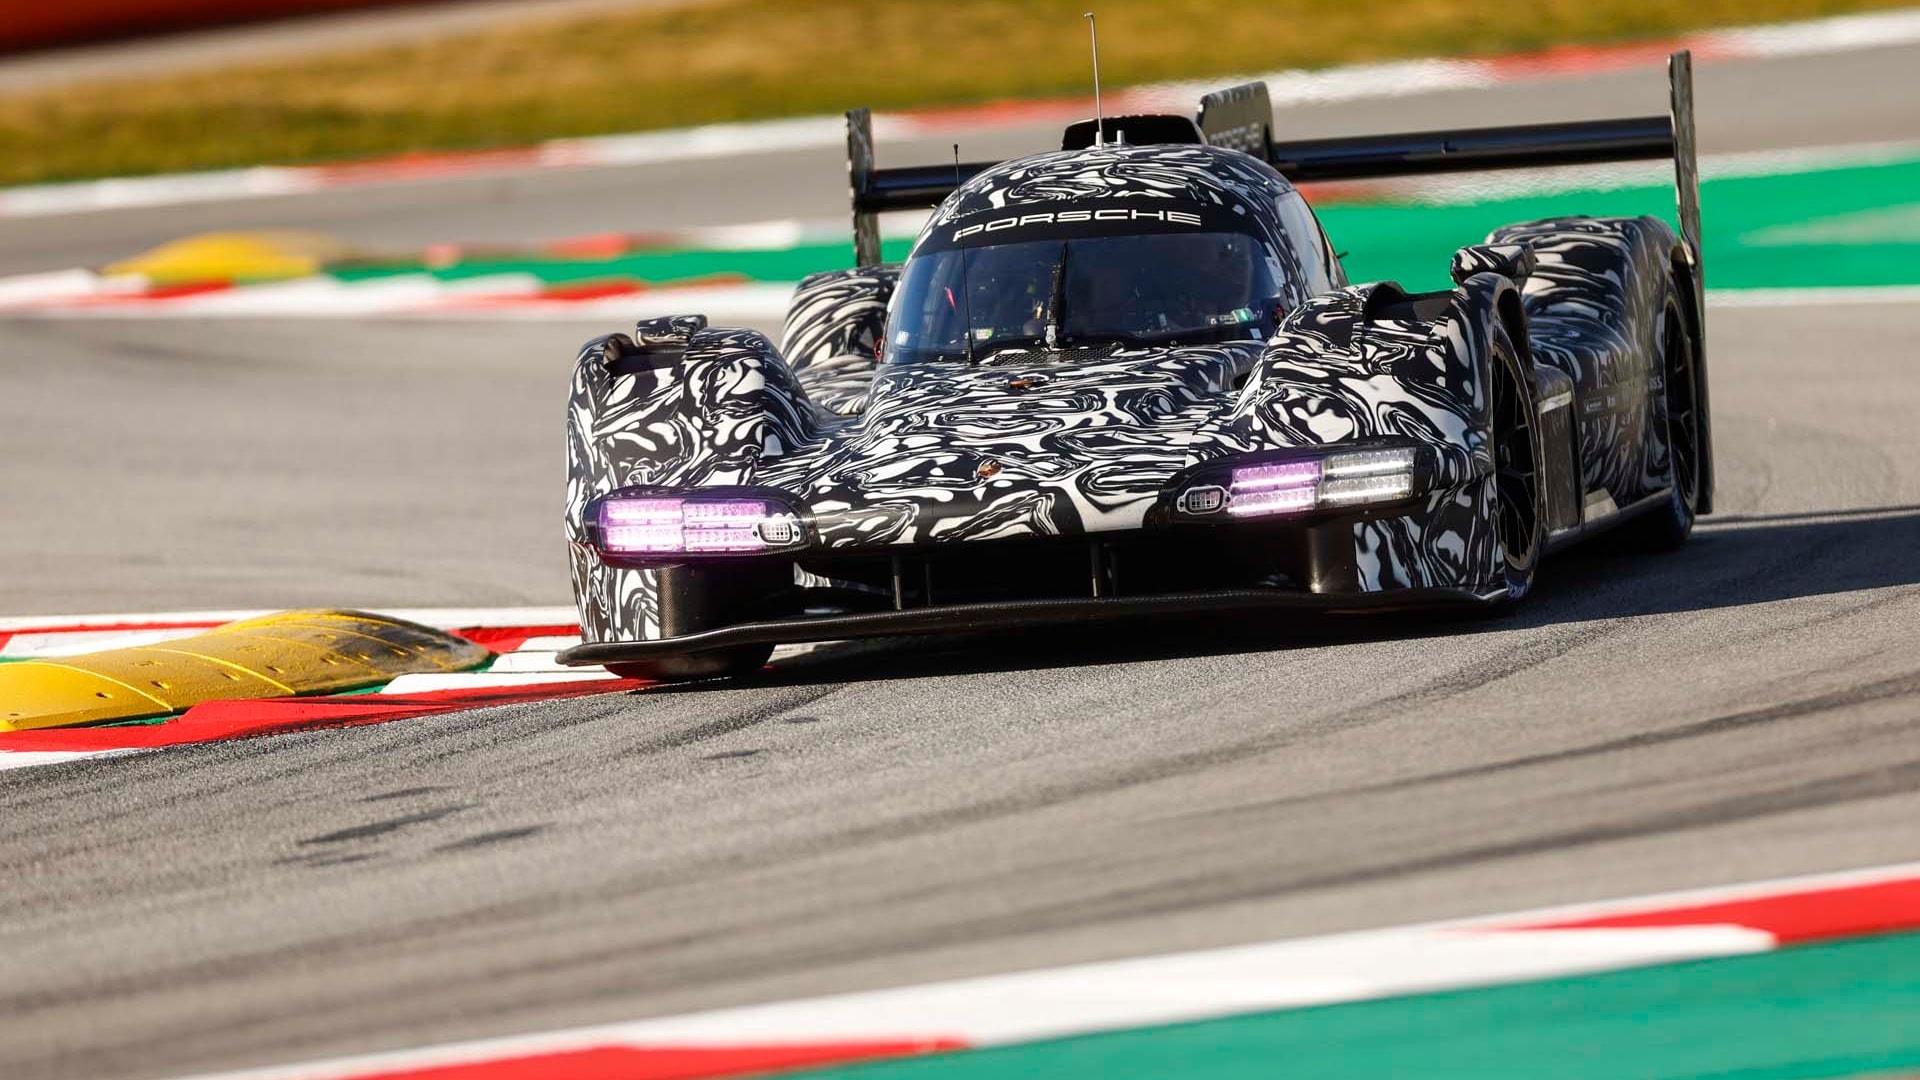 2023 Porsche LMDh race car tests at Circuit de Barcelona-Catalunya